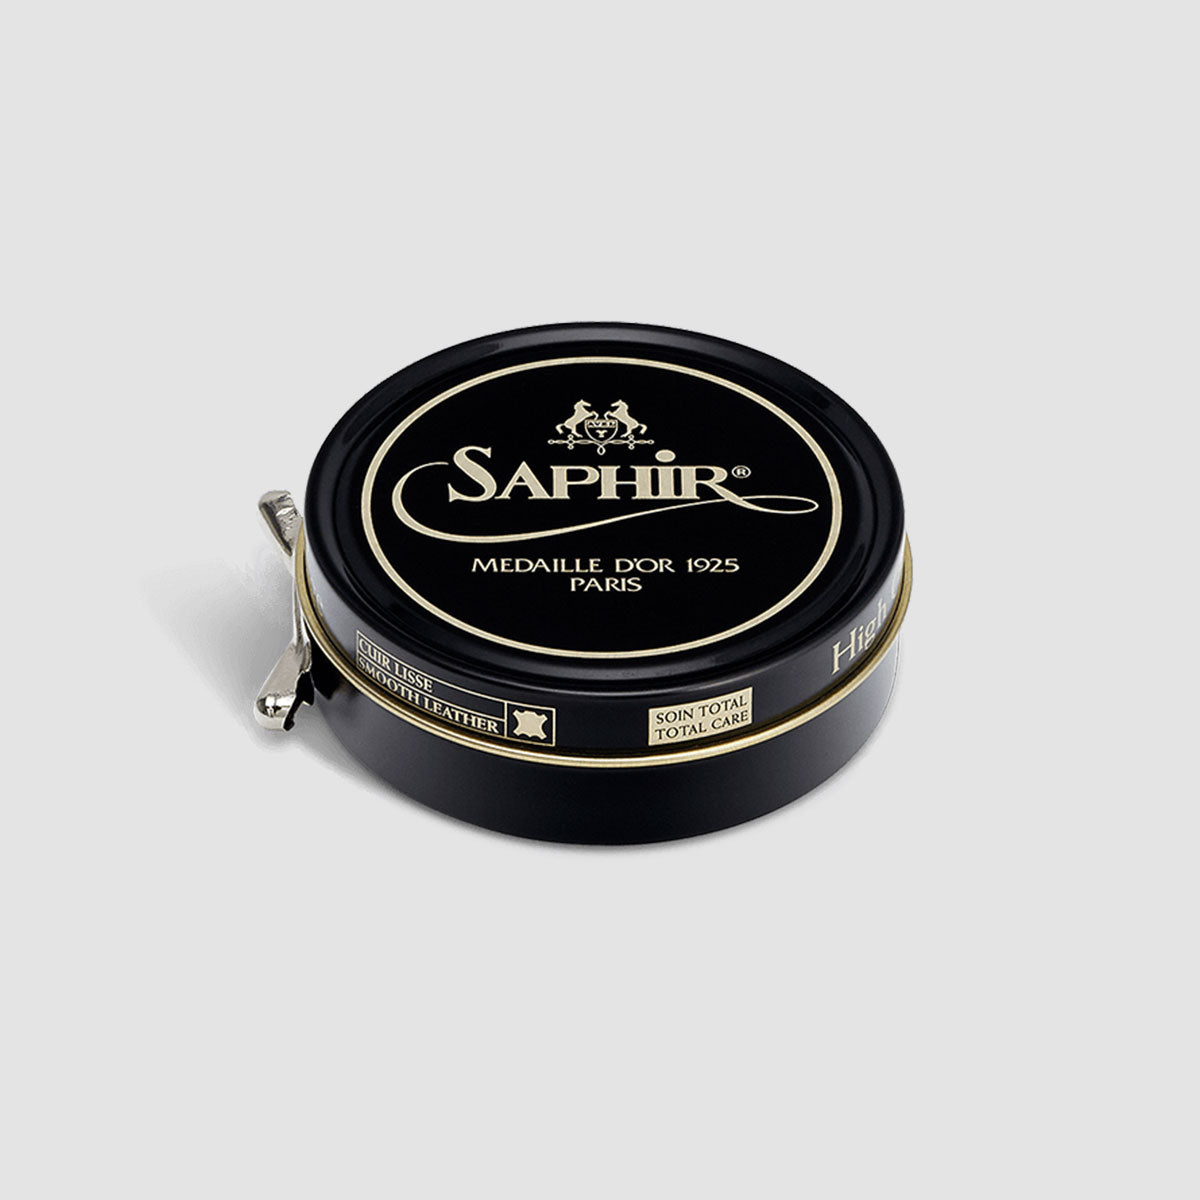 Saphir Medaille d'Or Pate de Luxe Wax Shoe Polish